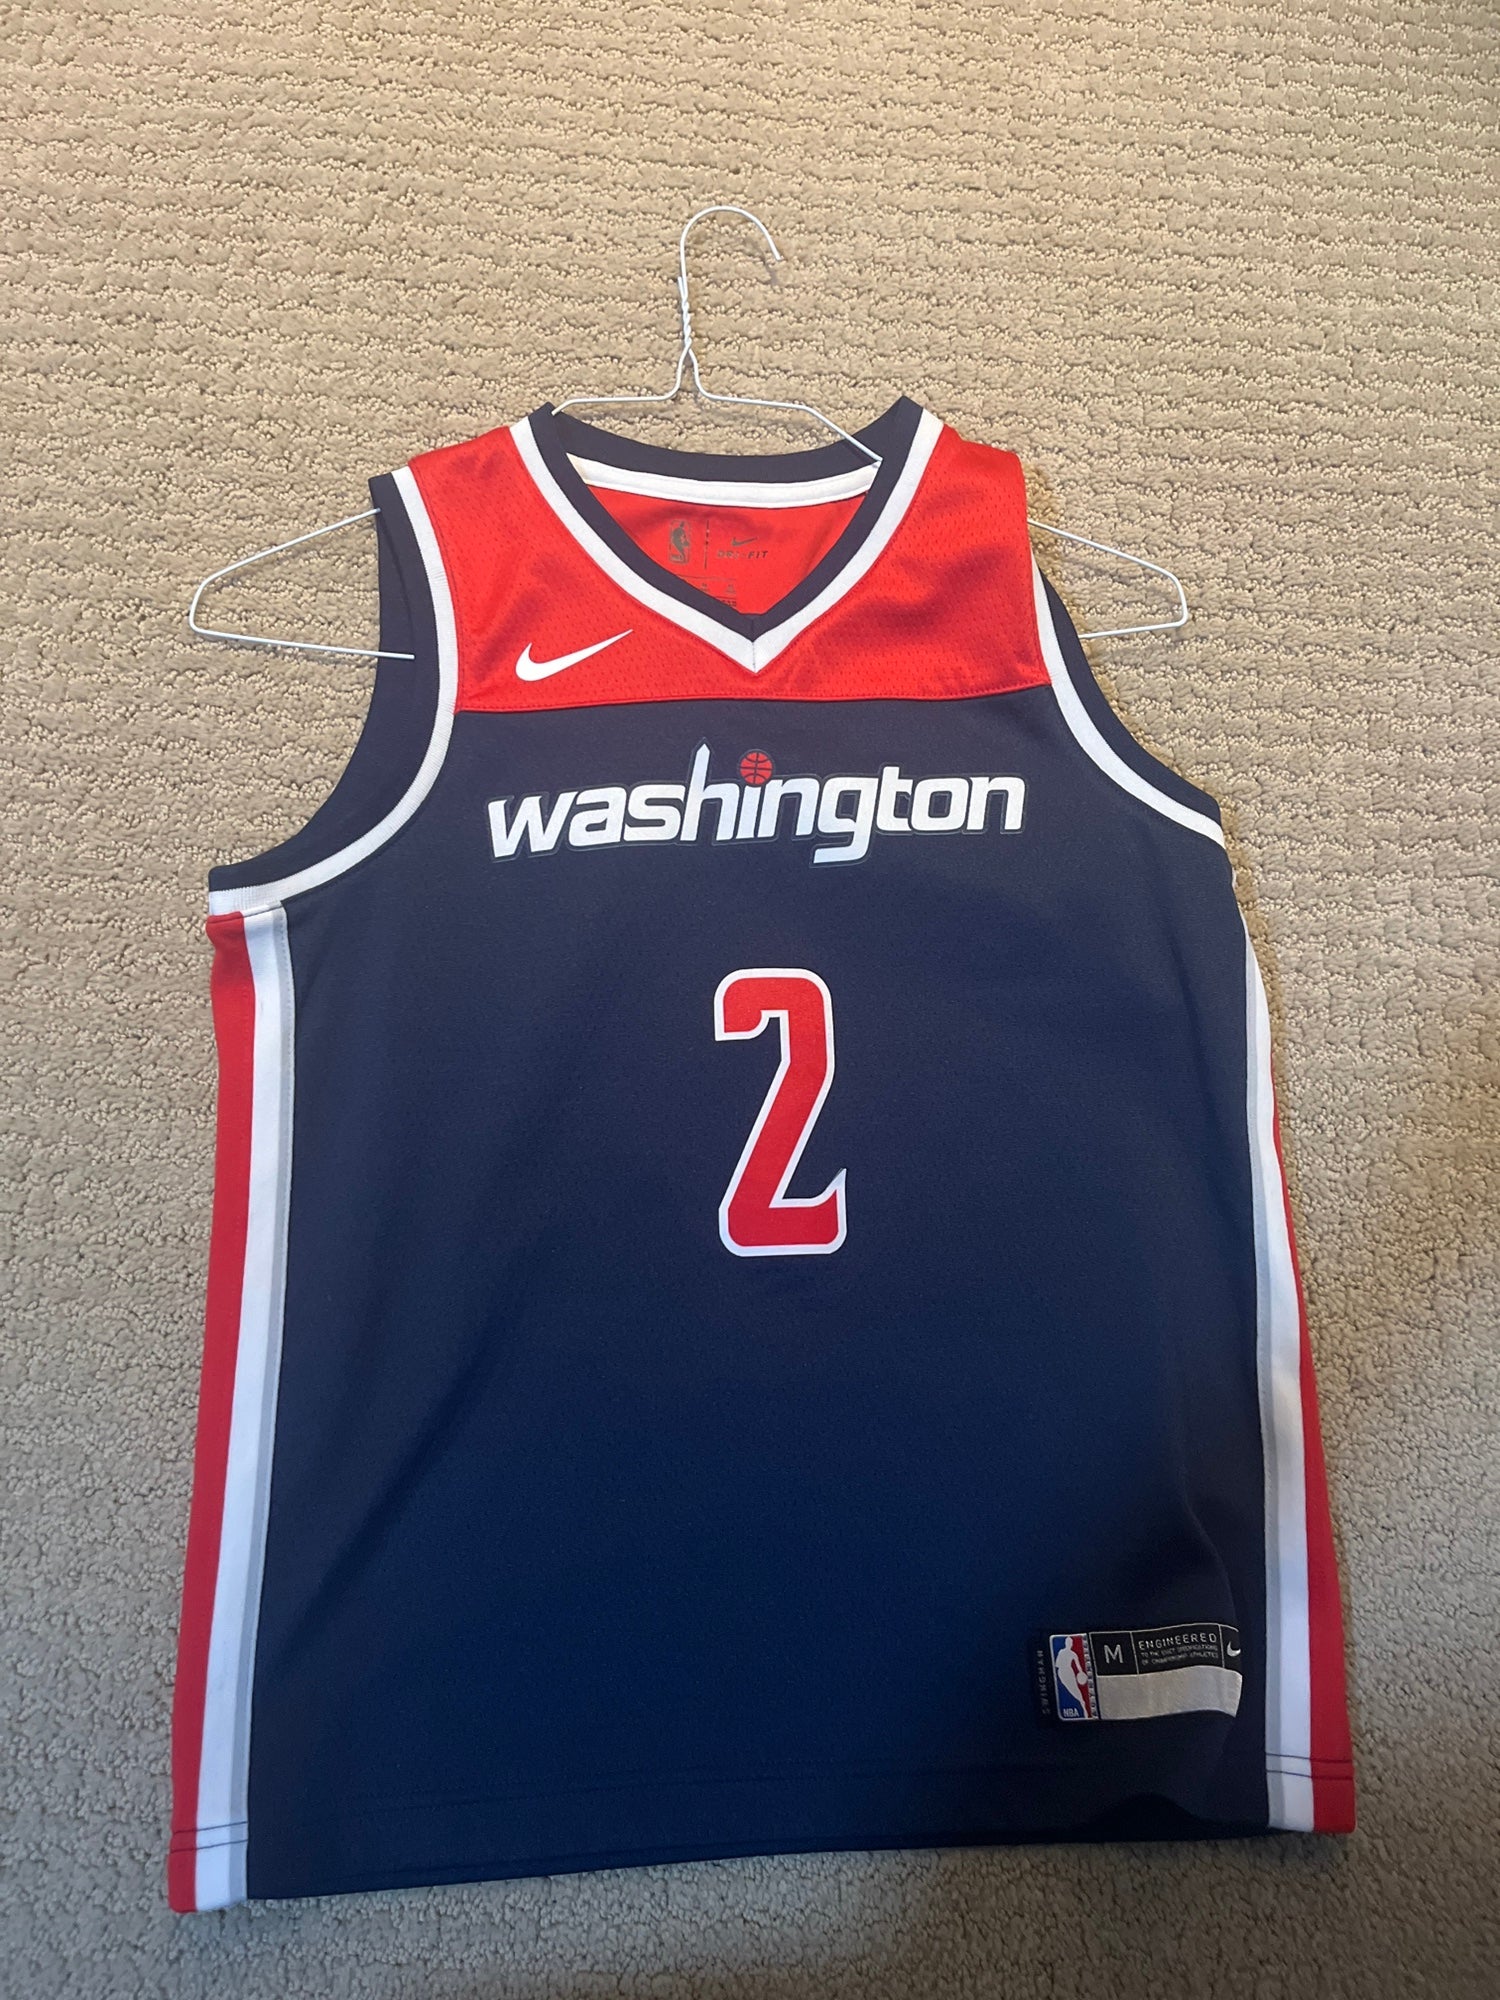 Washington Wizards Throwback Jerseys, Vintage NBA Gear